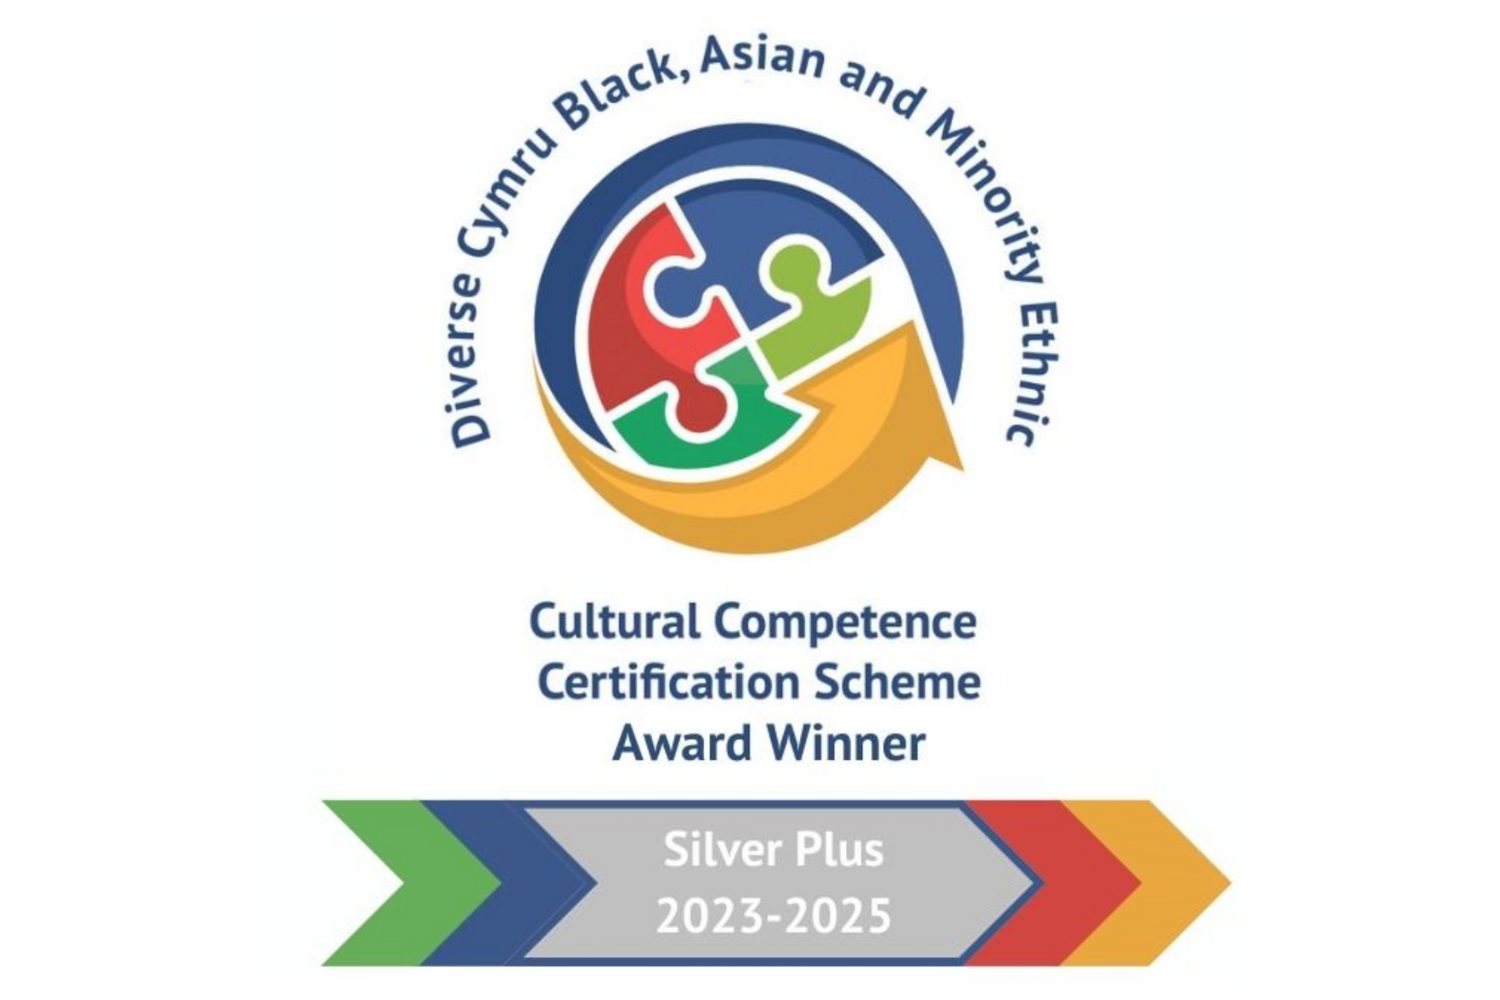 Divesity Cymru, Black, Asian and Minority Ethnic. Cultural Competence Certification Scheme Award Winner. Silver Plus 2023-2025